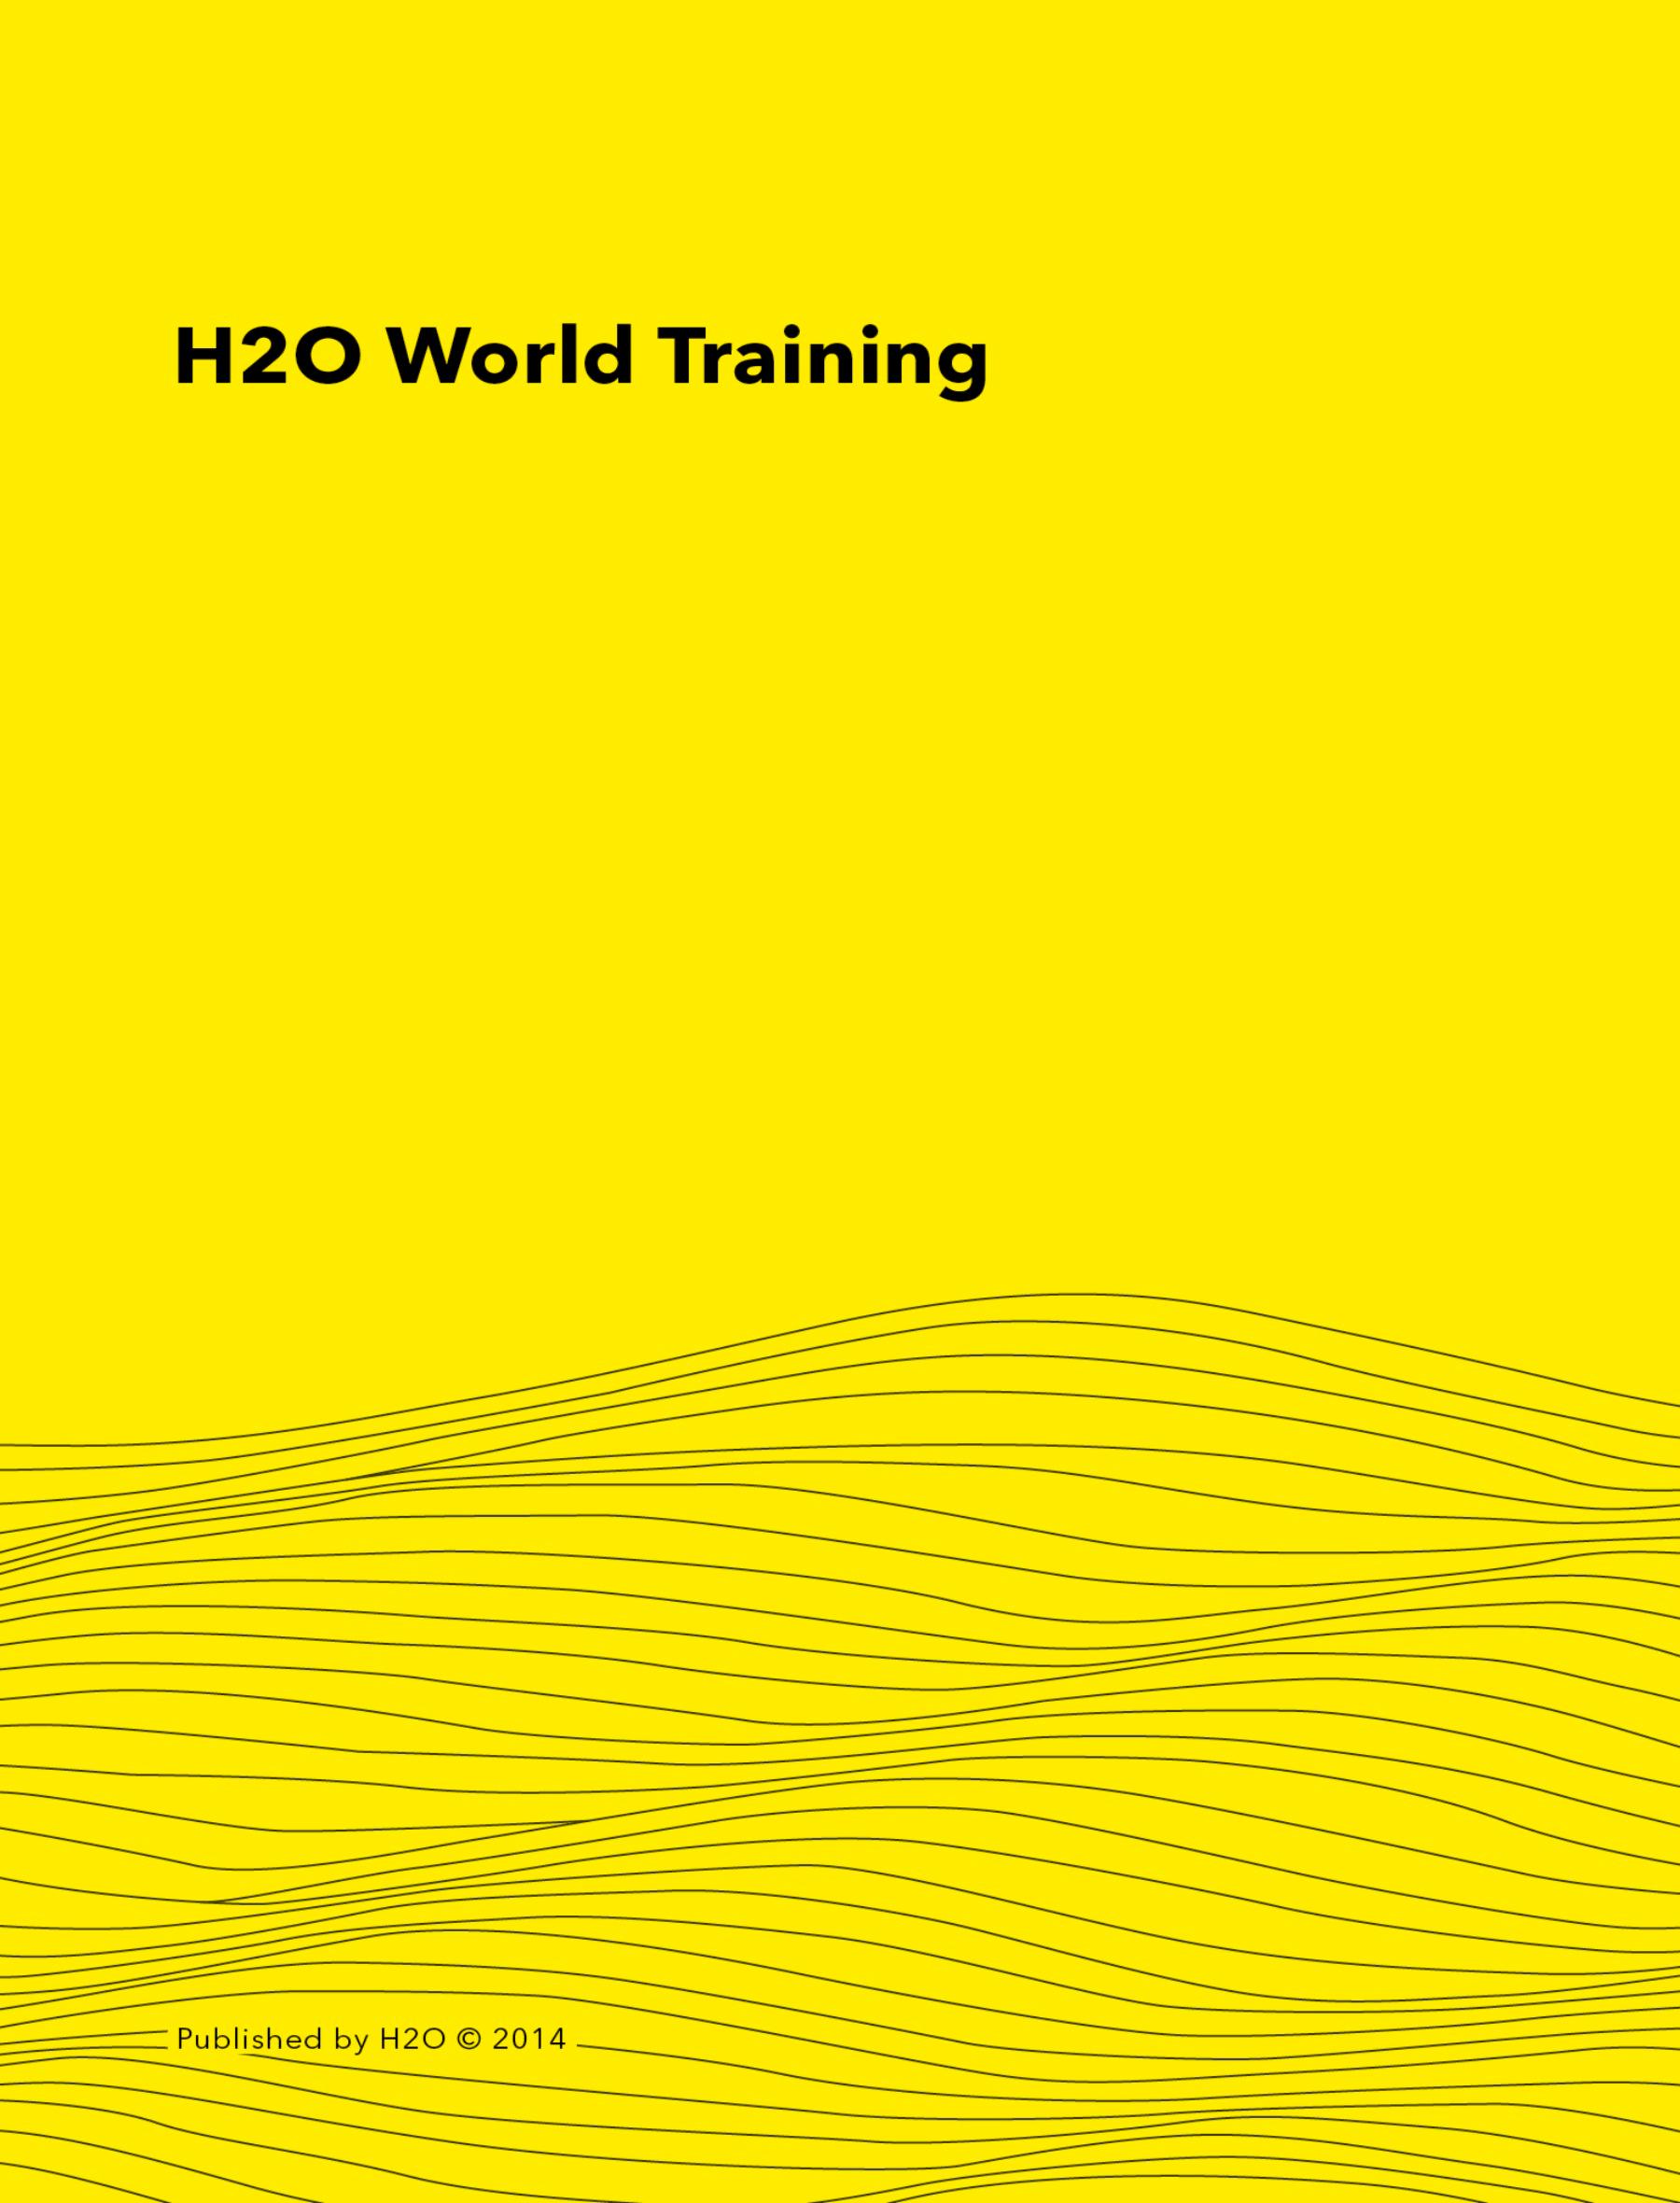 training-booklet